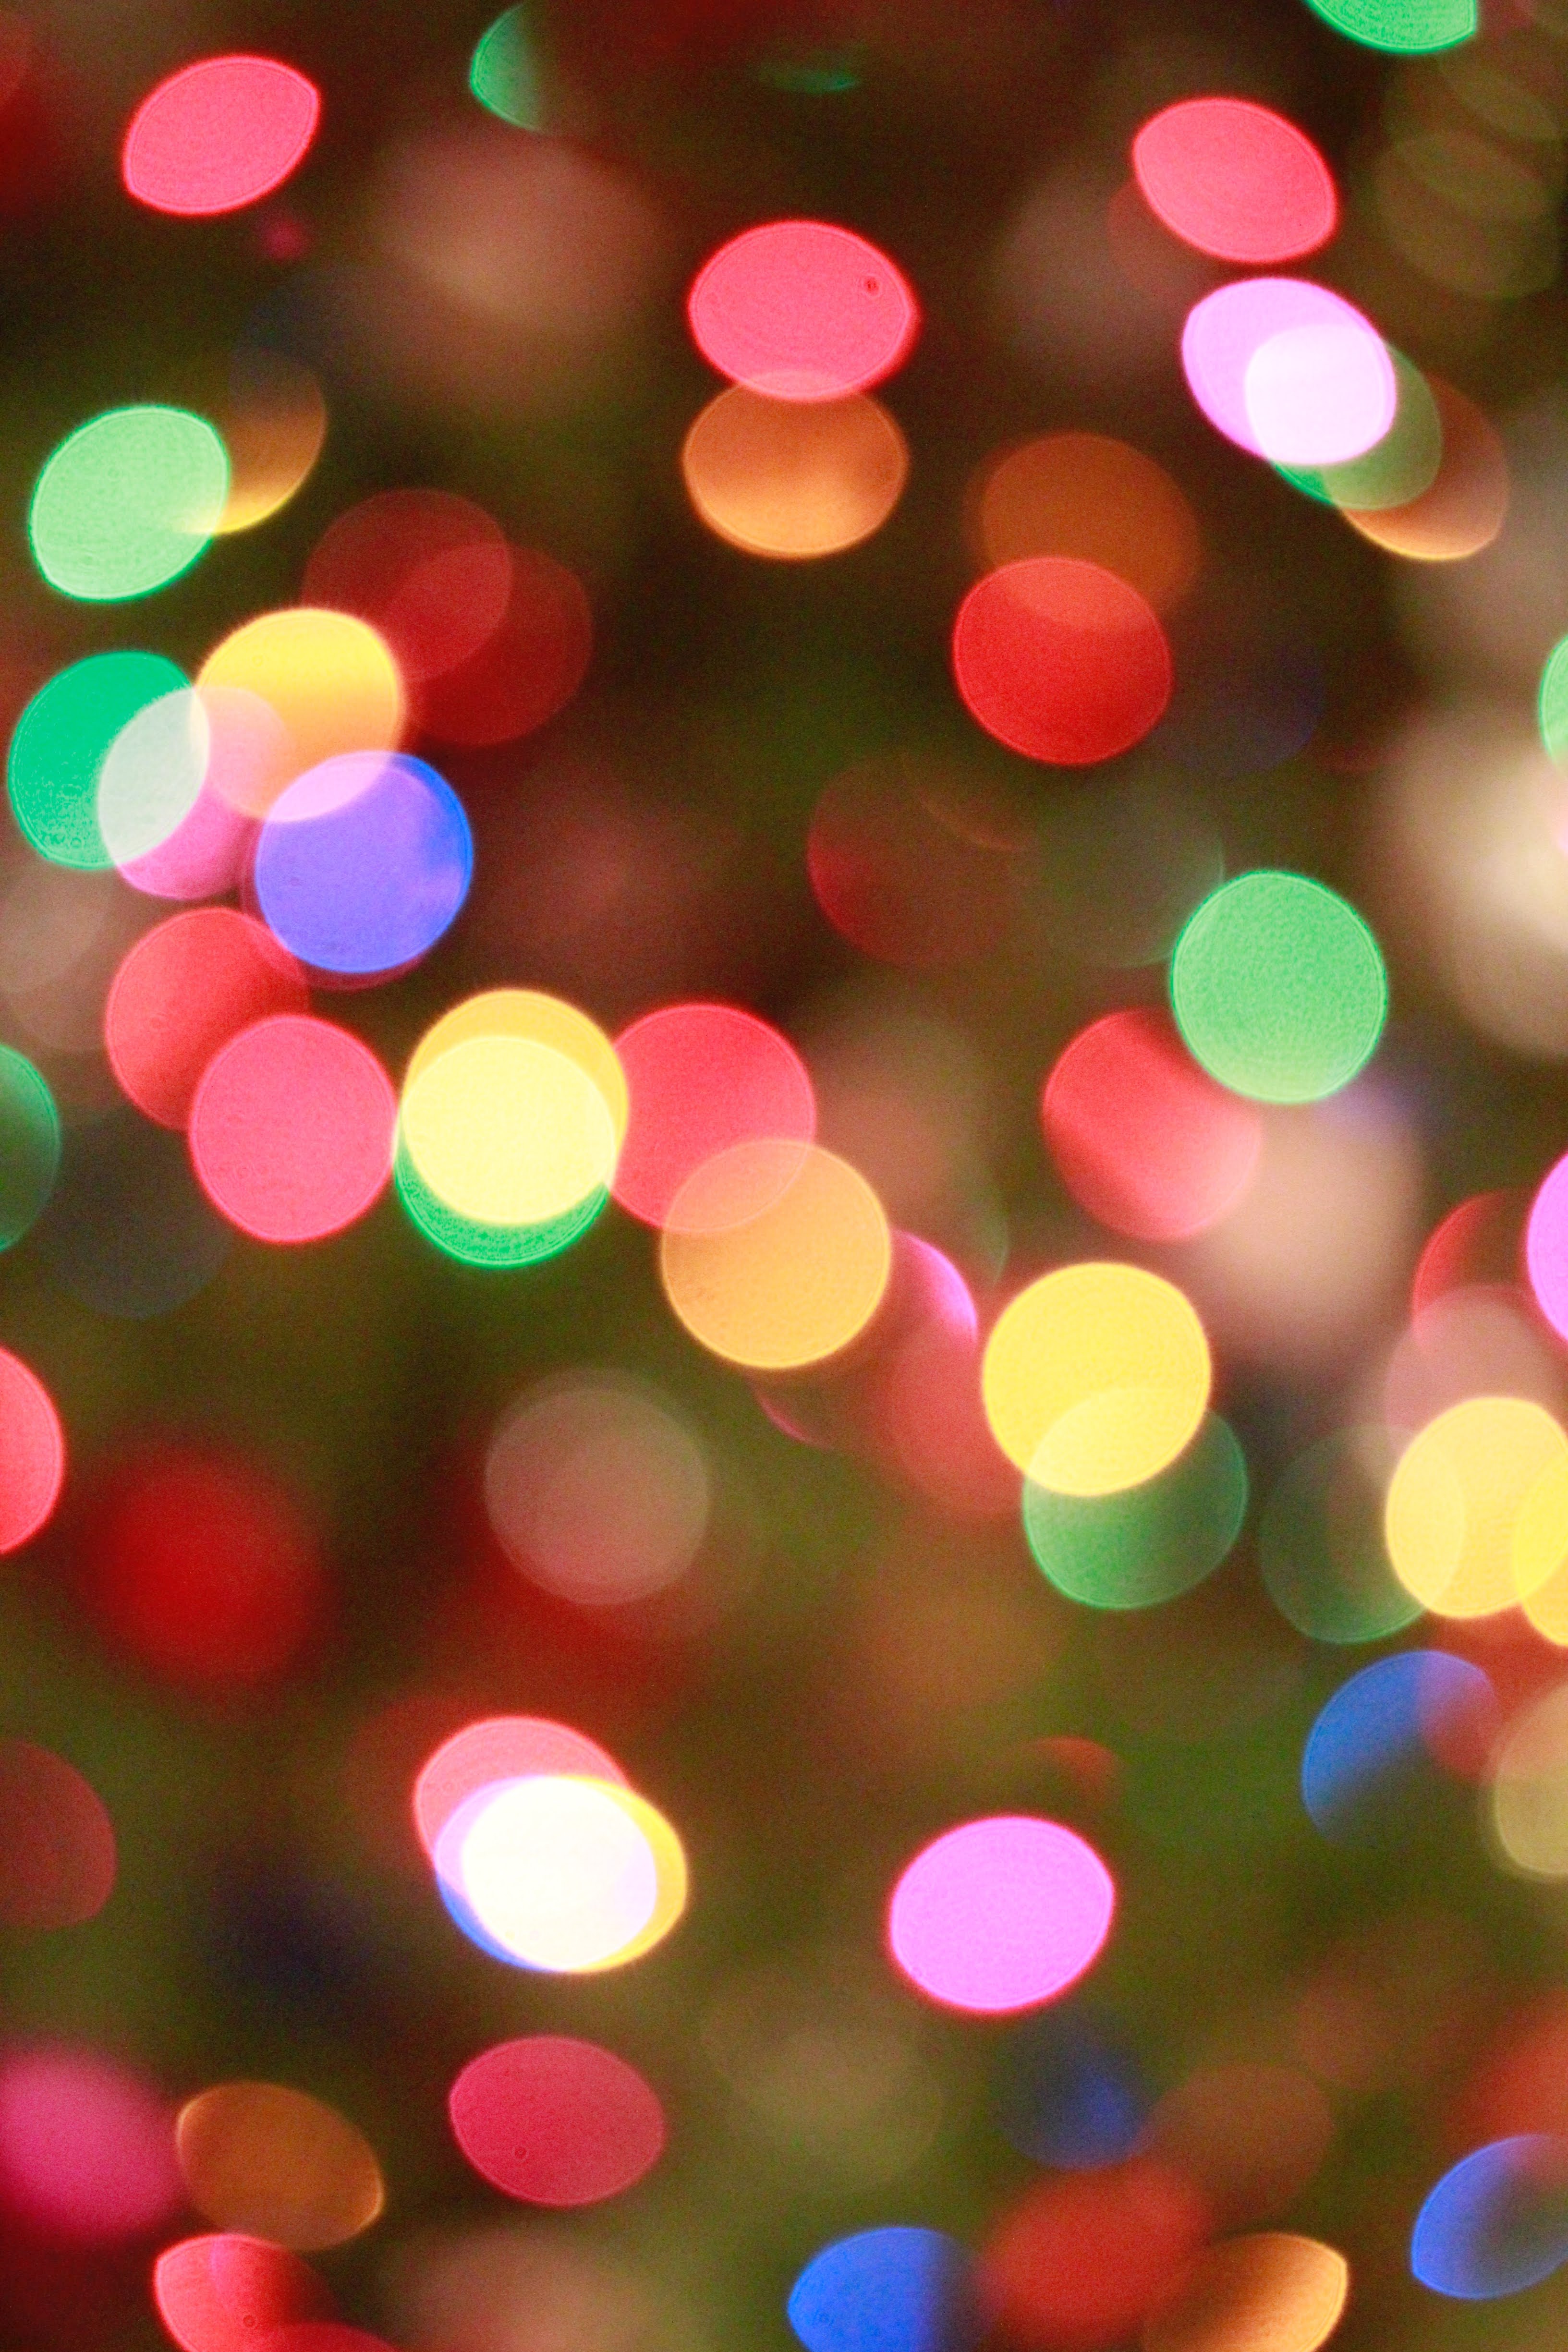 Colored Christmas Lights | Photo by Madison Kaminski via Unsplash